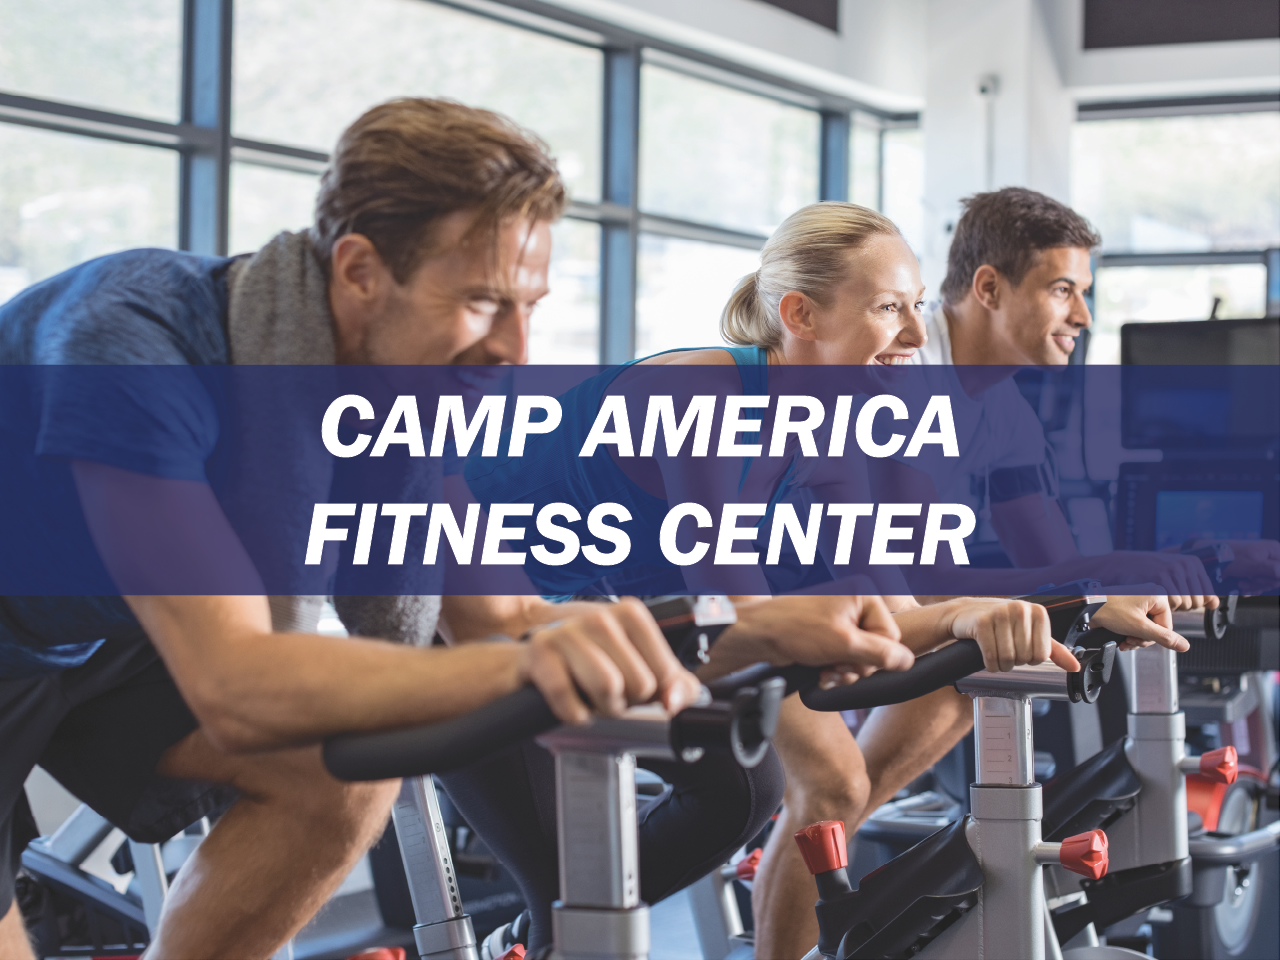 Camp America Fitness Center Survey